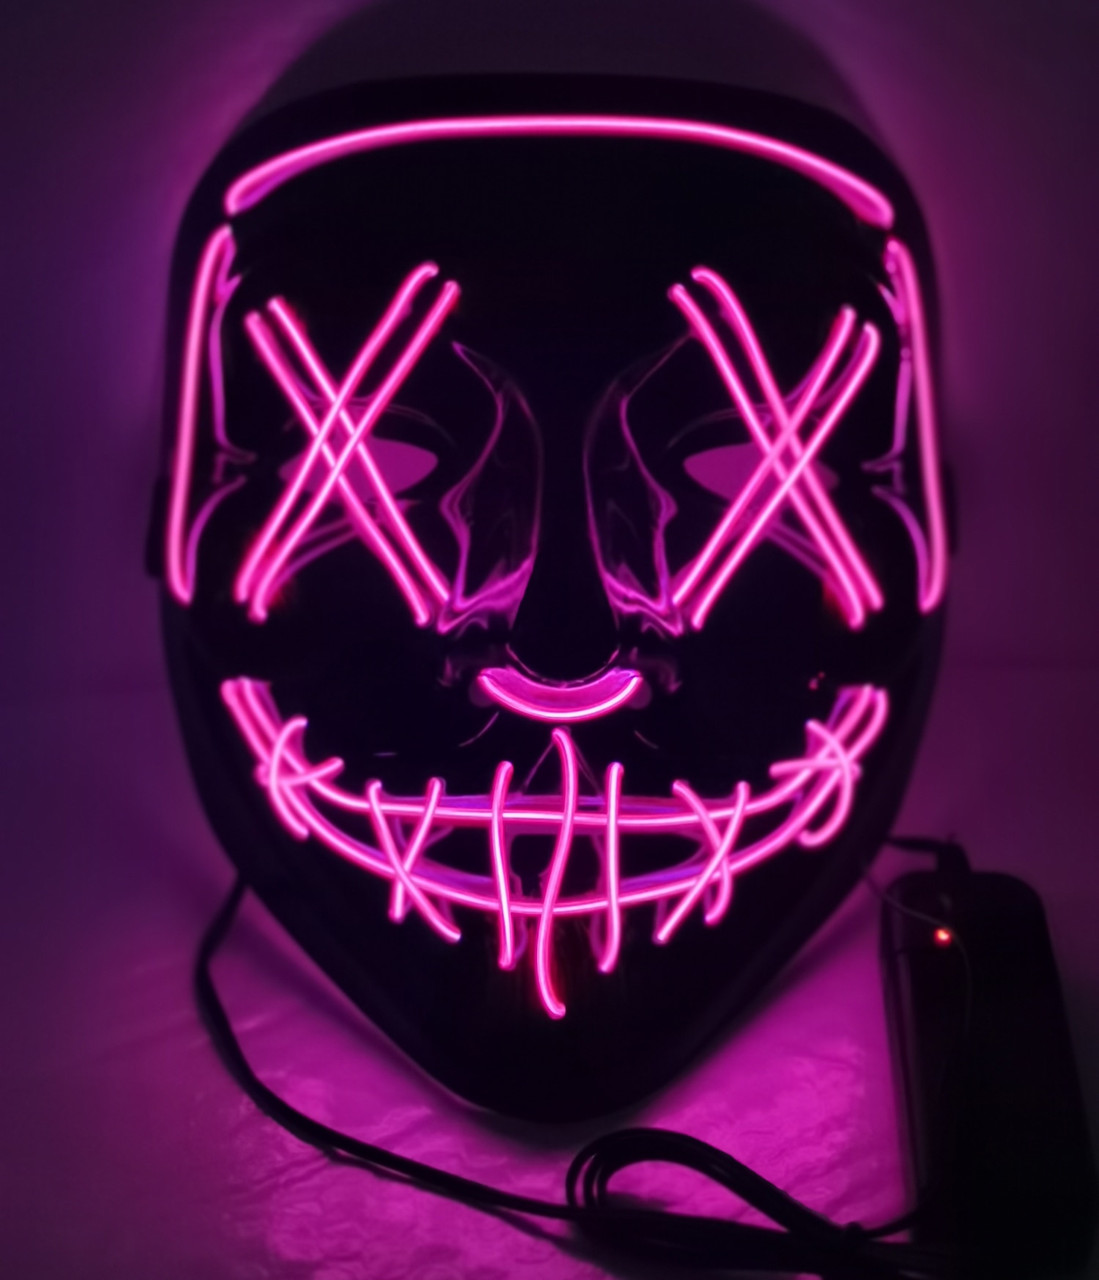 Led purge Mask Halloween Party Masque Masquerade Masks Neon Maske Light ...